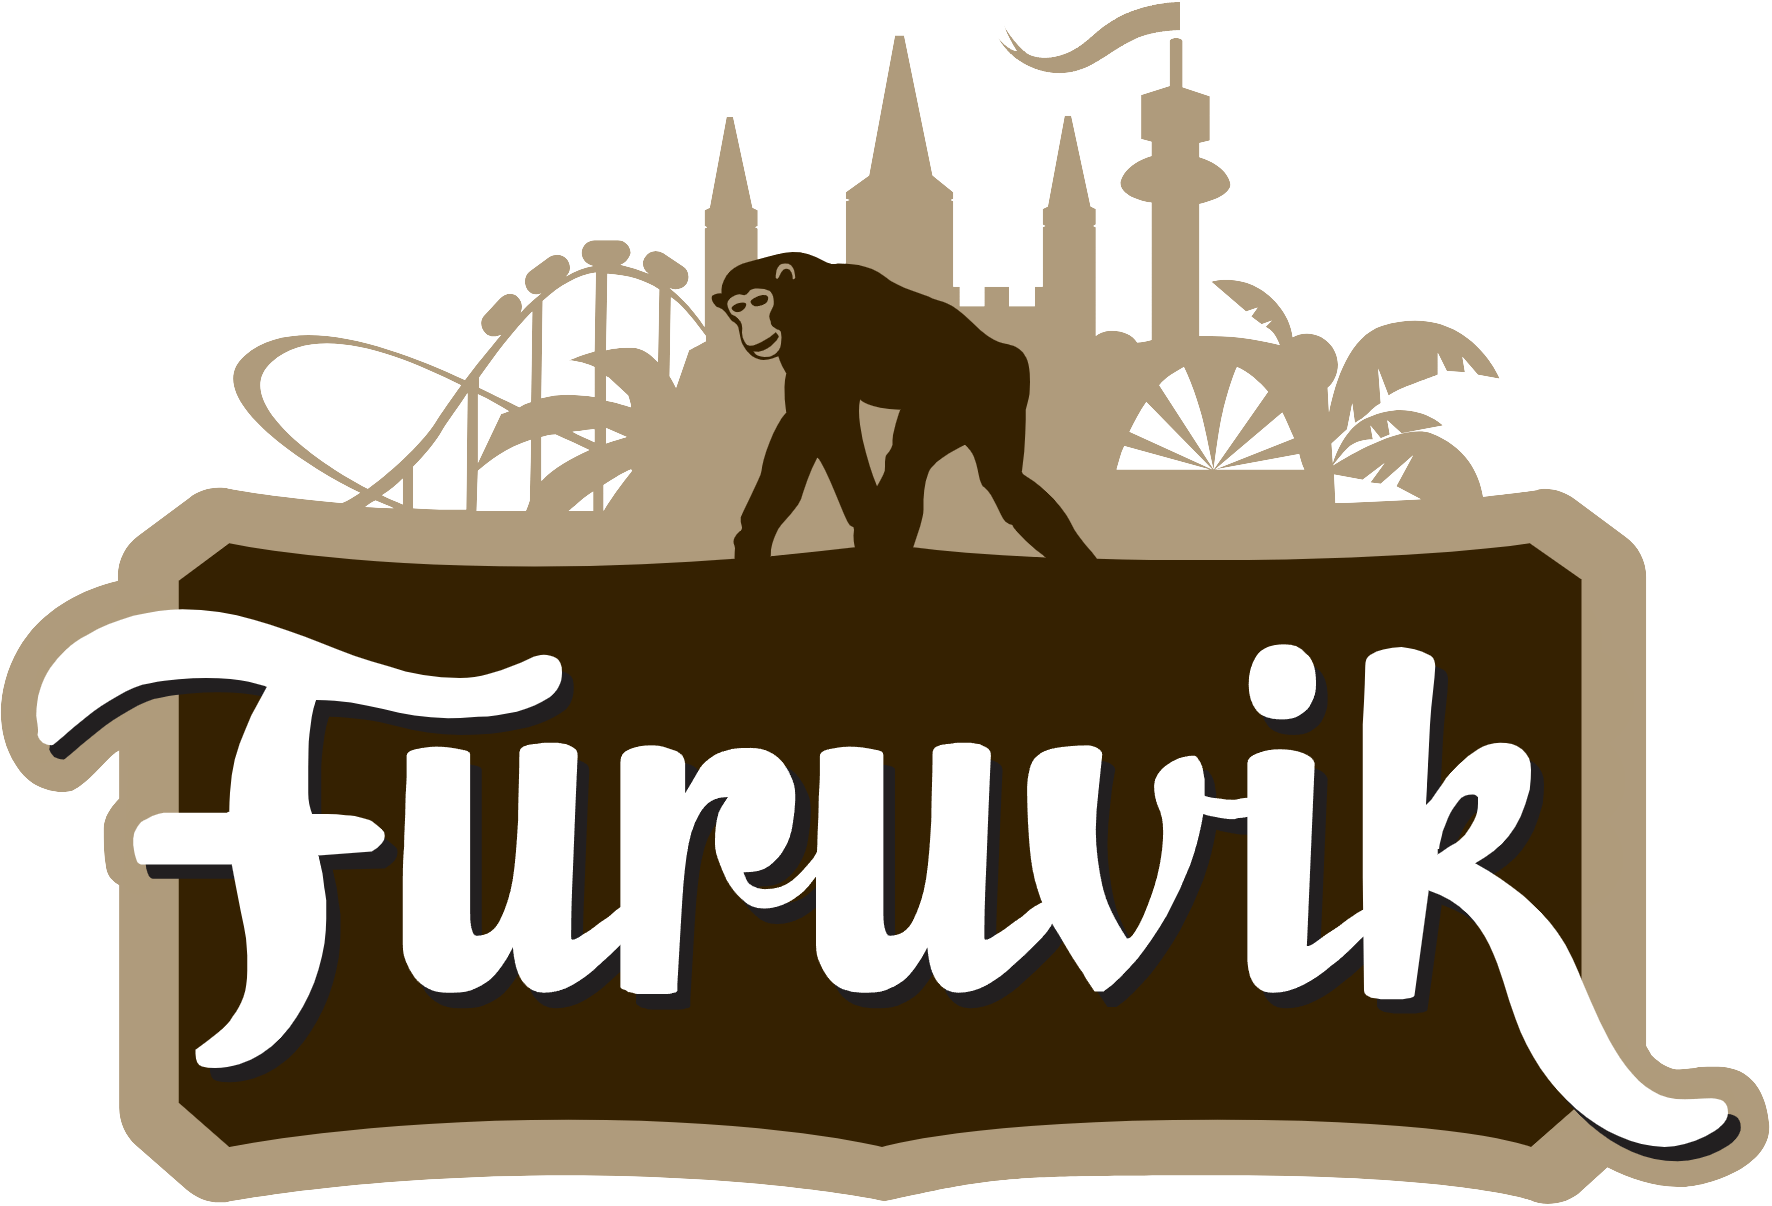 Furuvik